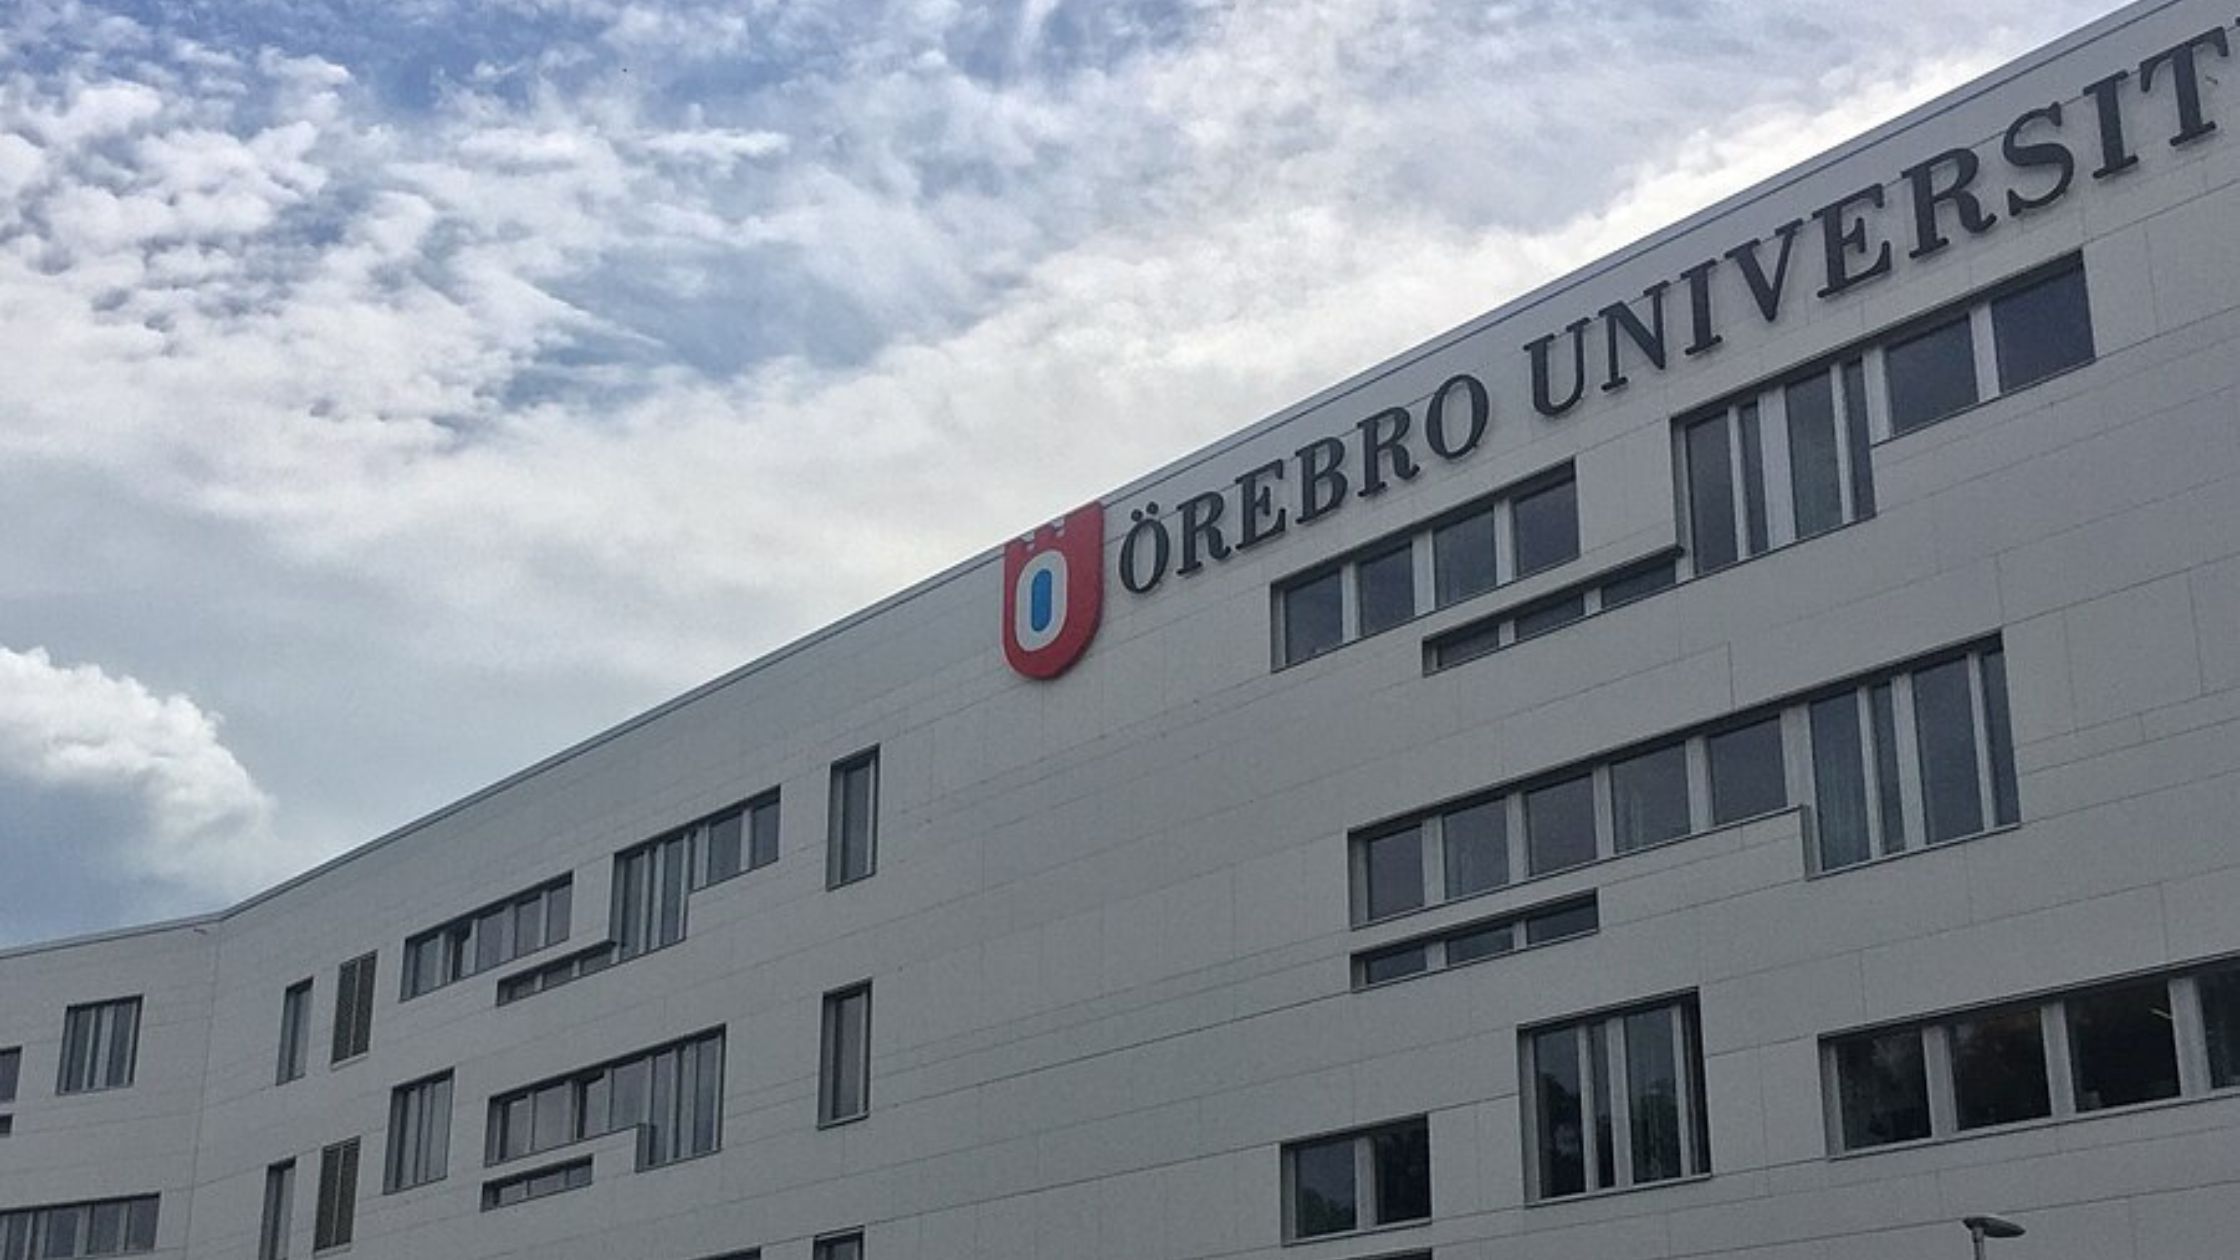 Building of Orebro University